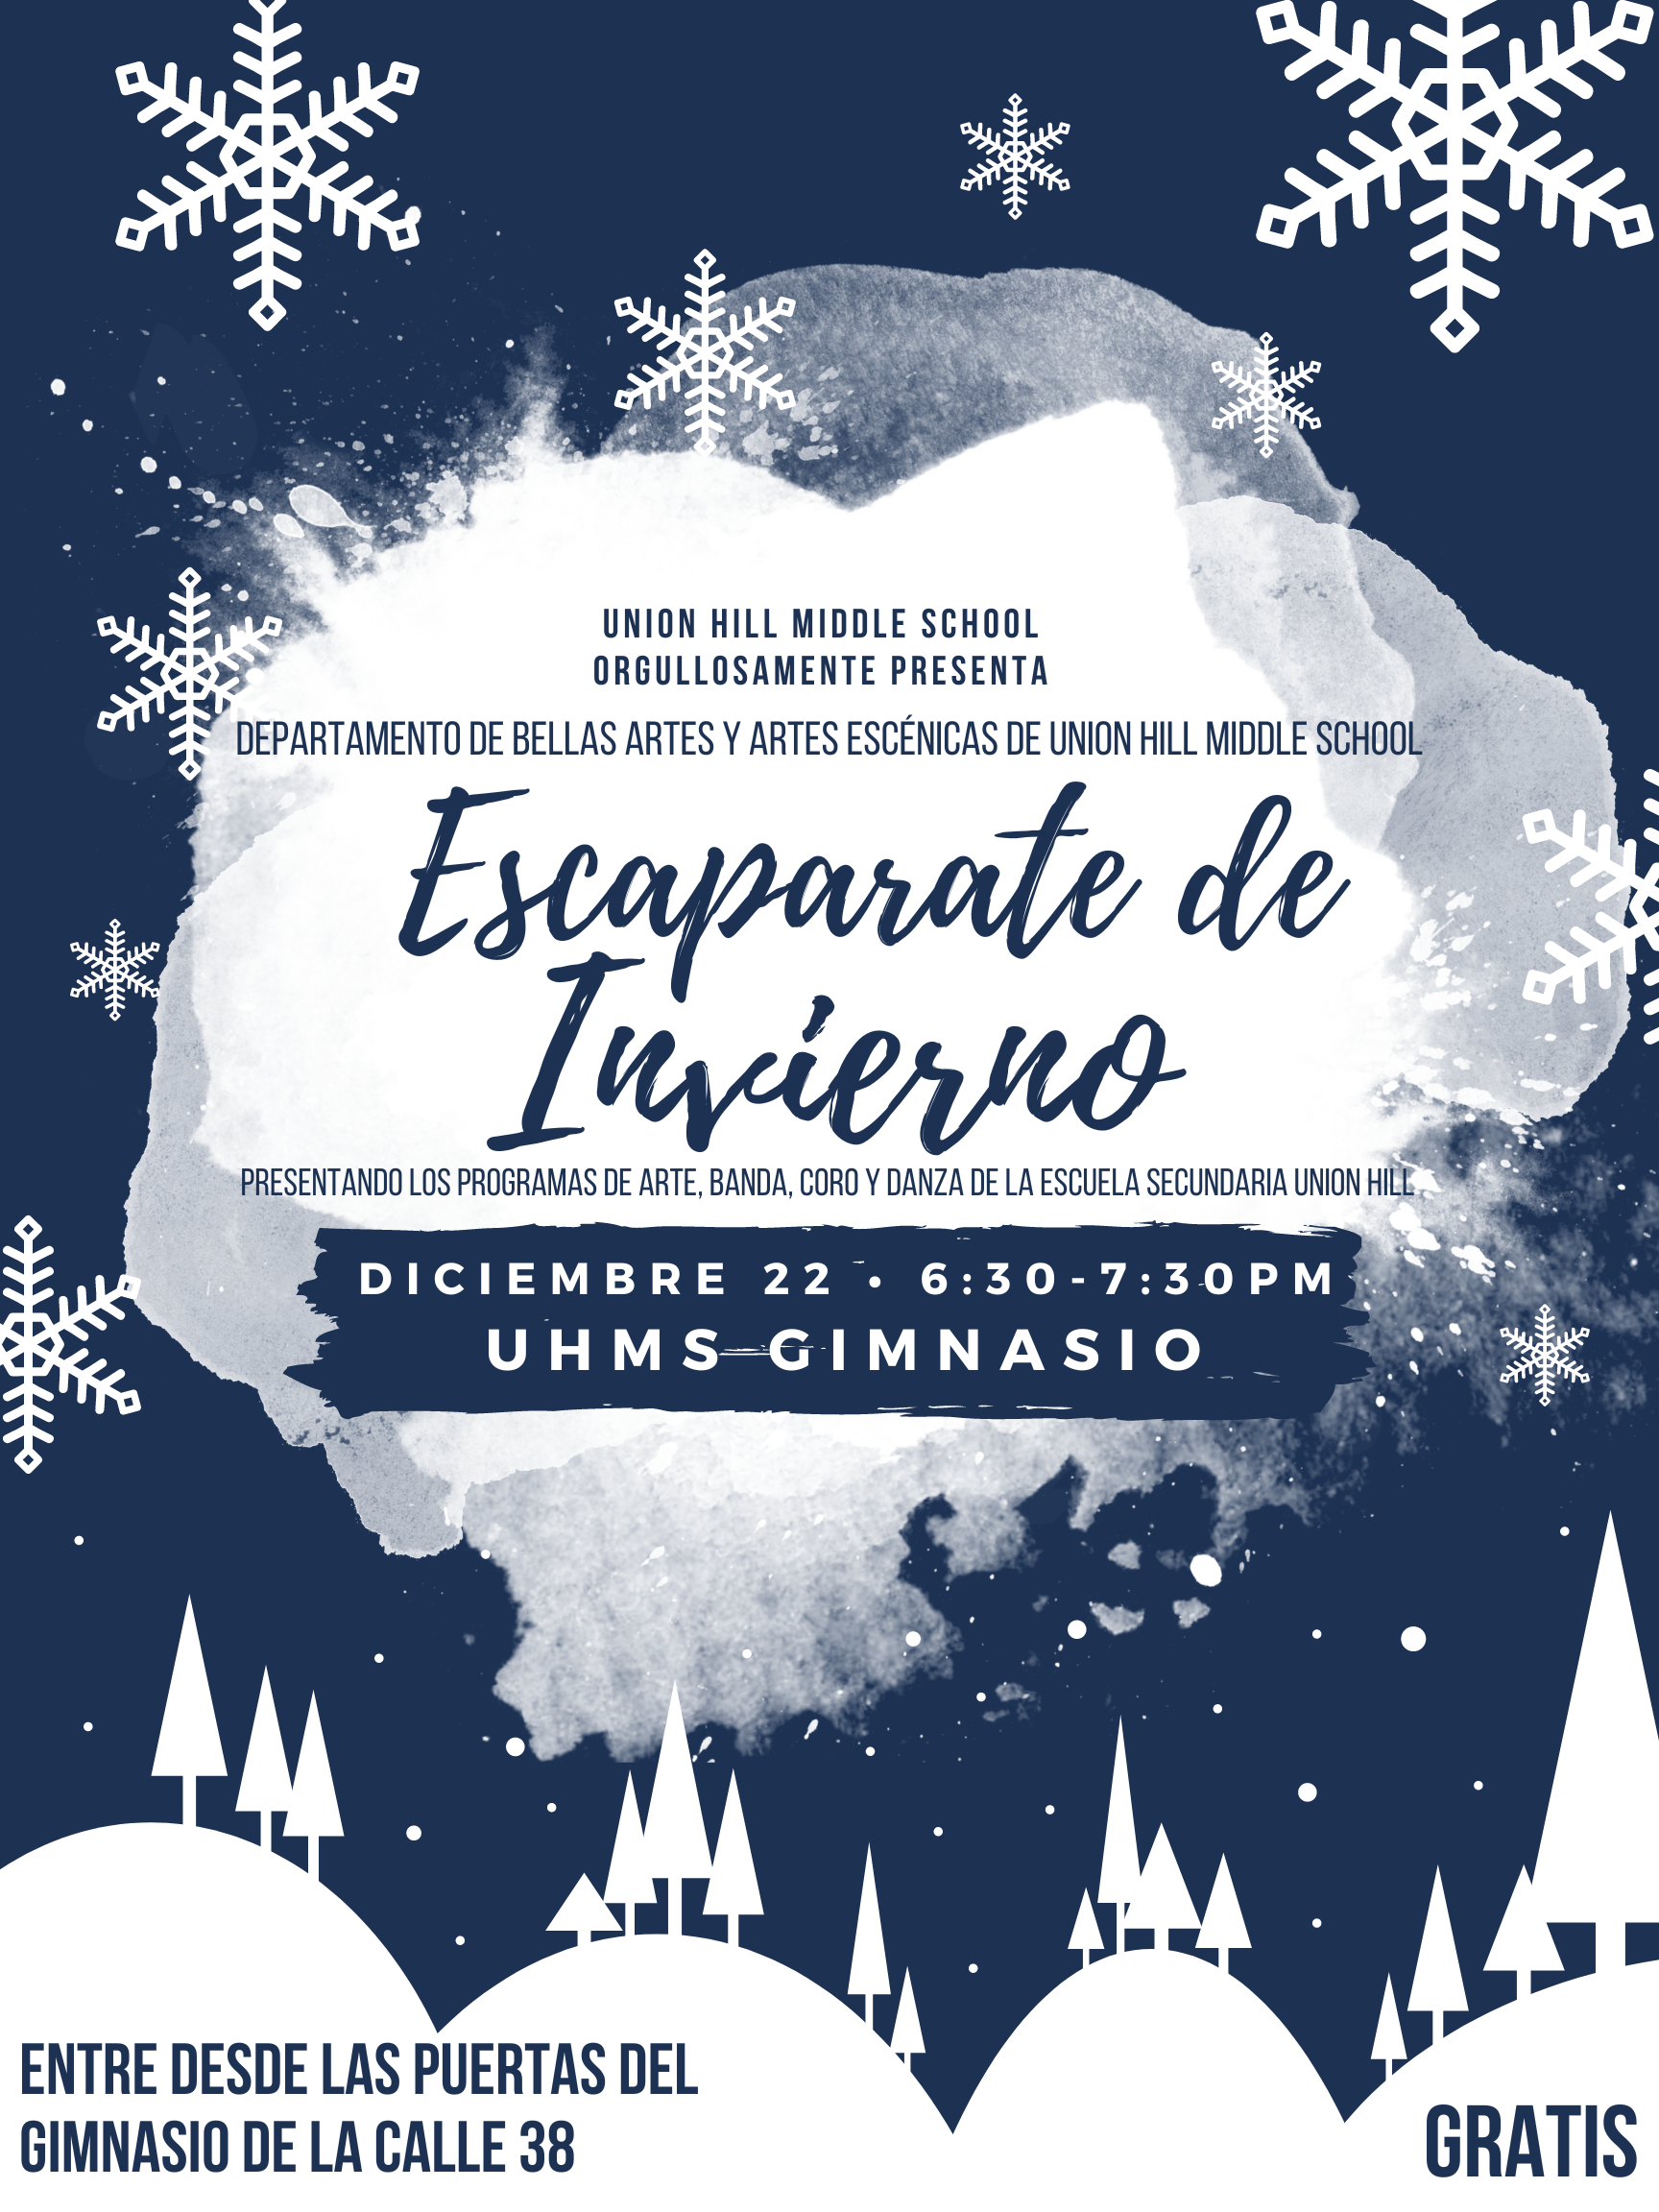 Union Hill Middle School Winter Showcase Flyer-Spanish